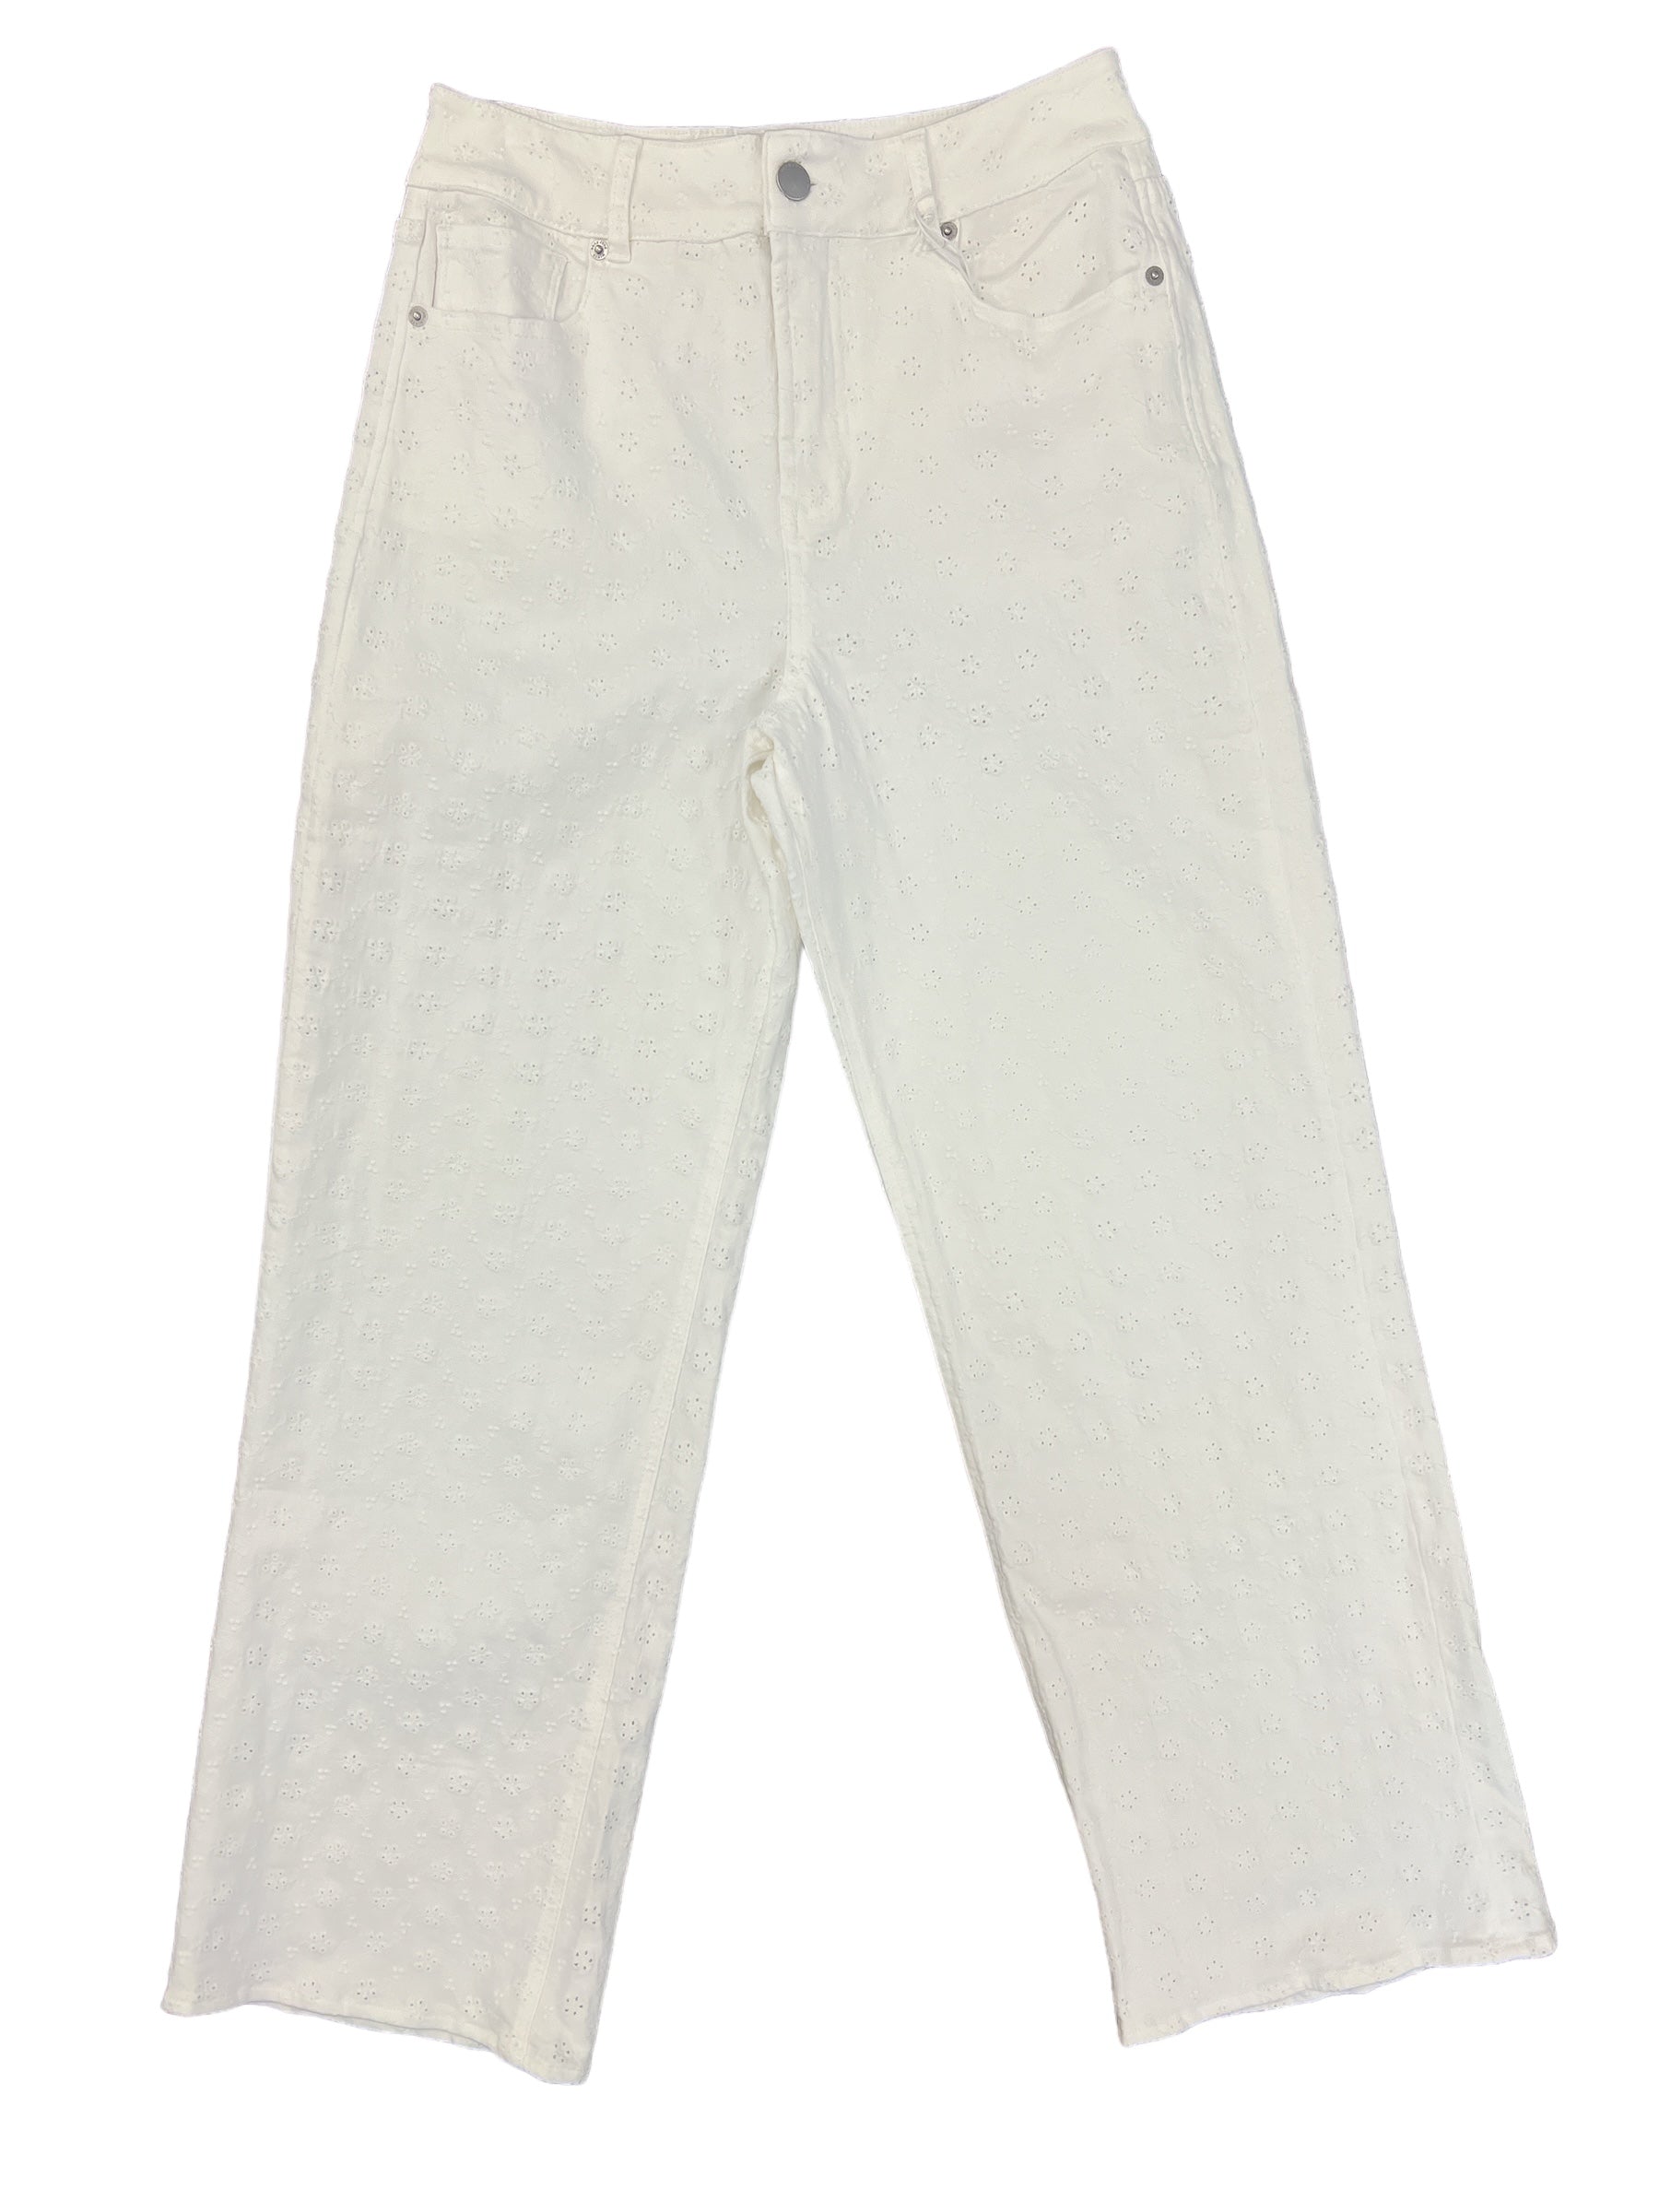 Holly Eyelet Jeans-230 Pants-Dear John-Simply Stylish Boutique | Women’s & Kid’s Fashion | Paducah, KY